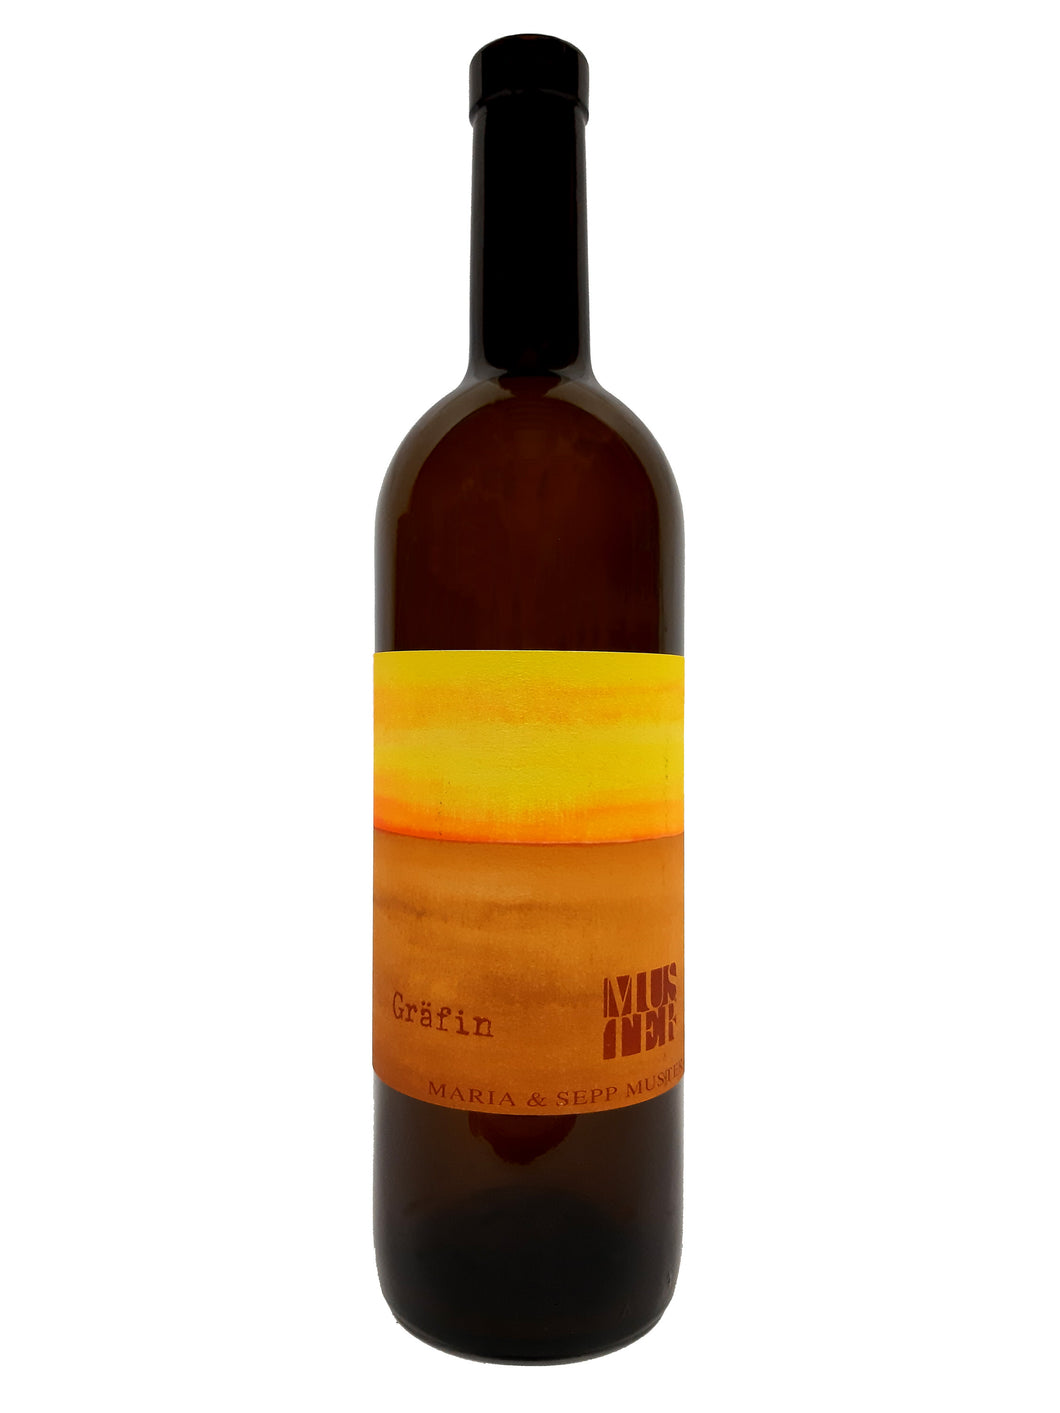 Muster - Gräfin 2020 (Orange Wine)